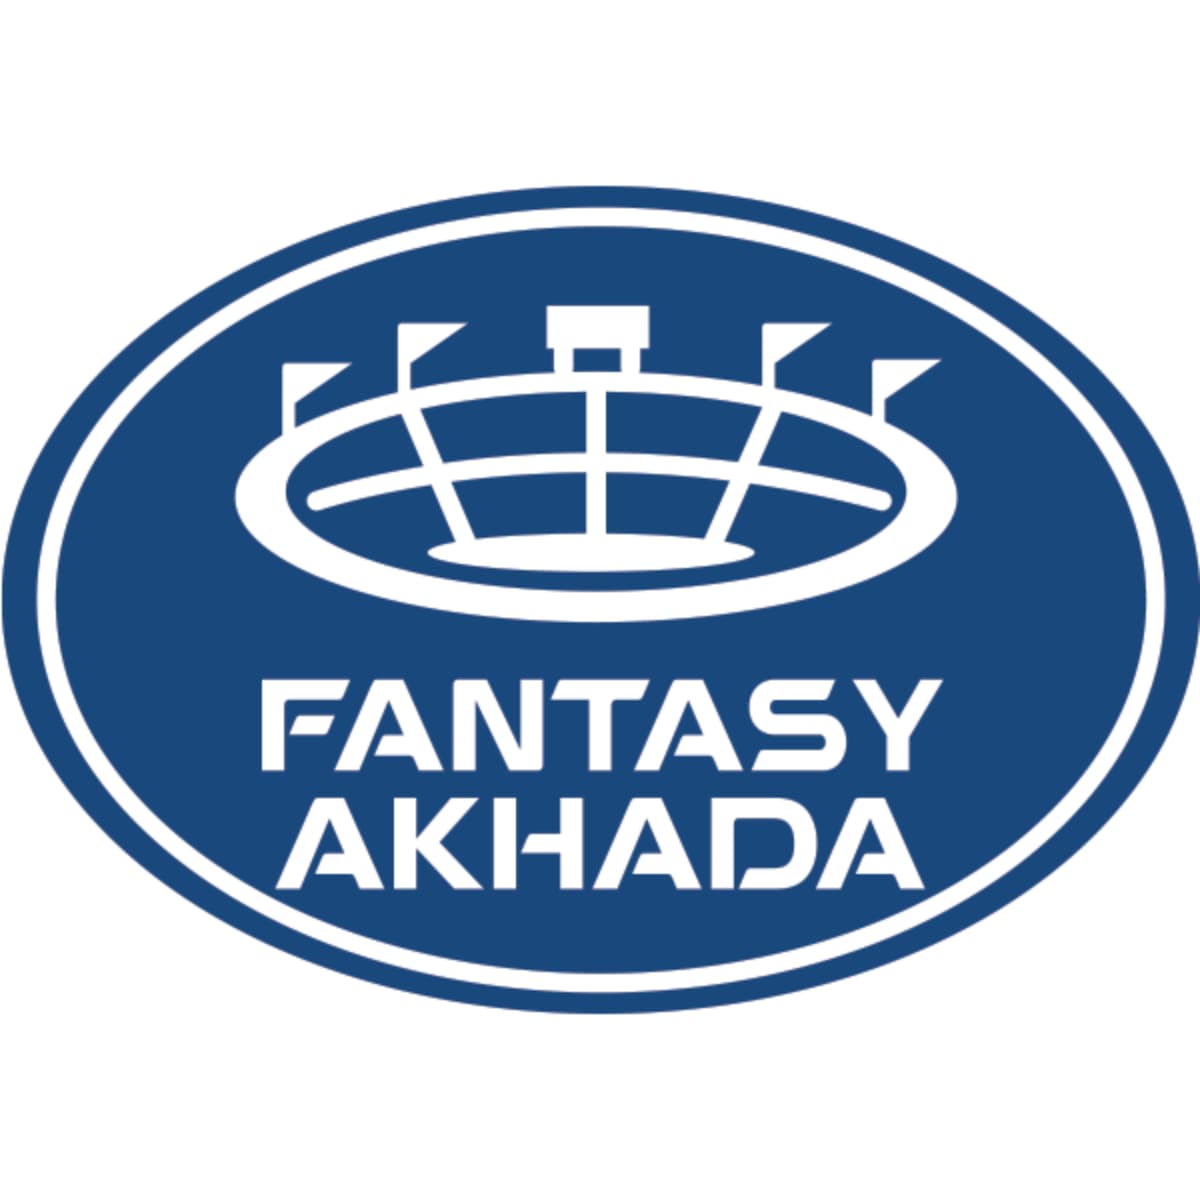 Fantasy Akhada's logo